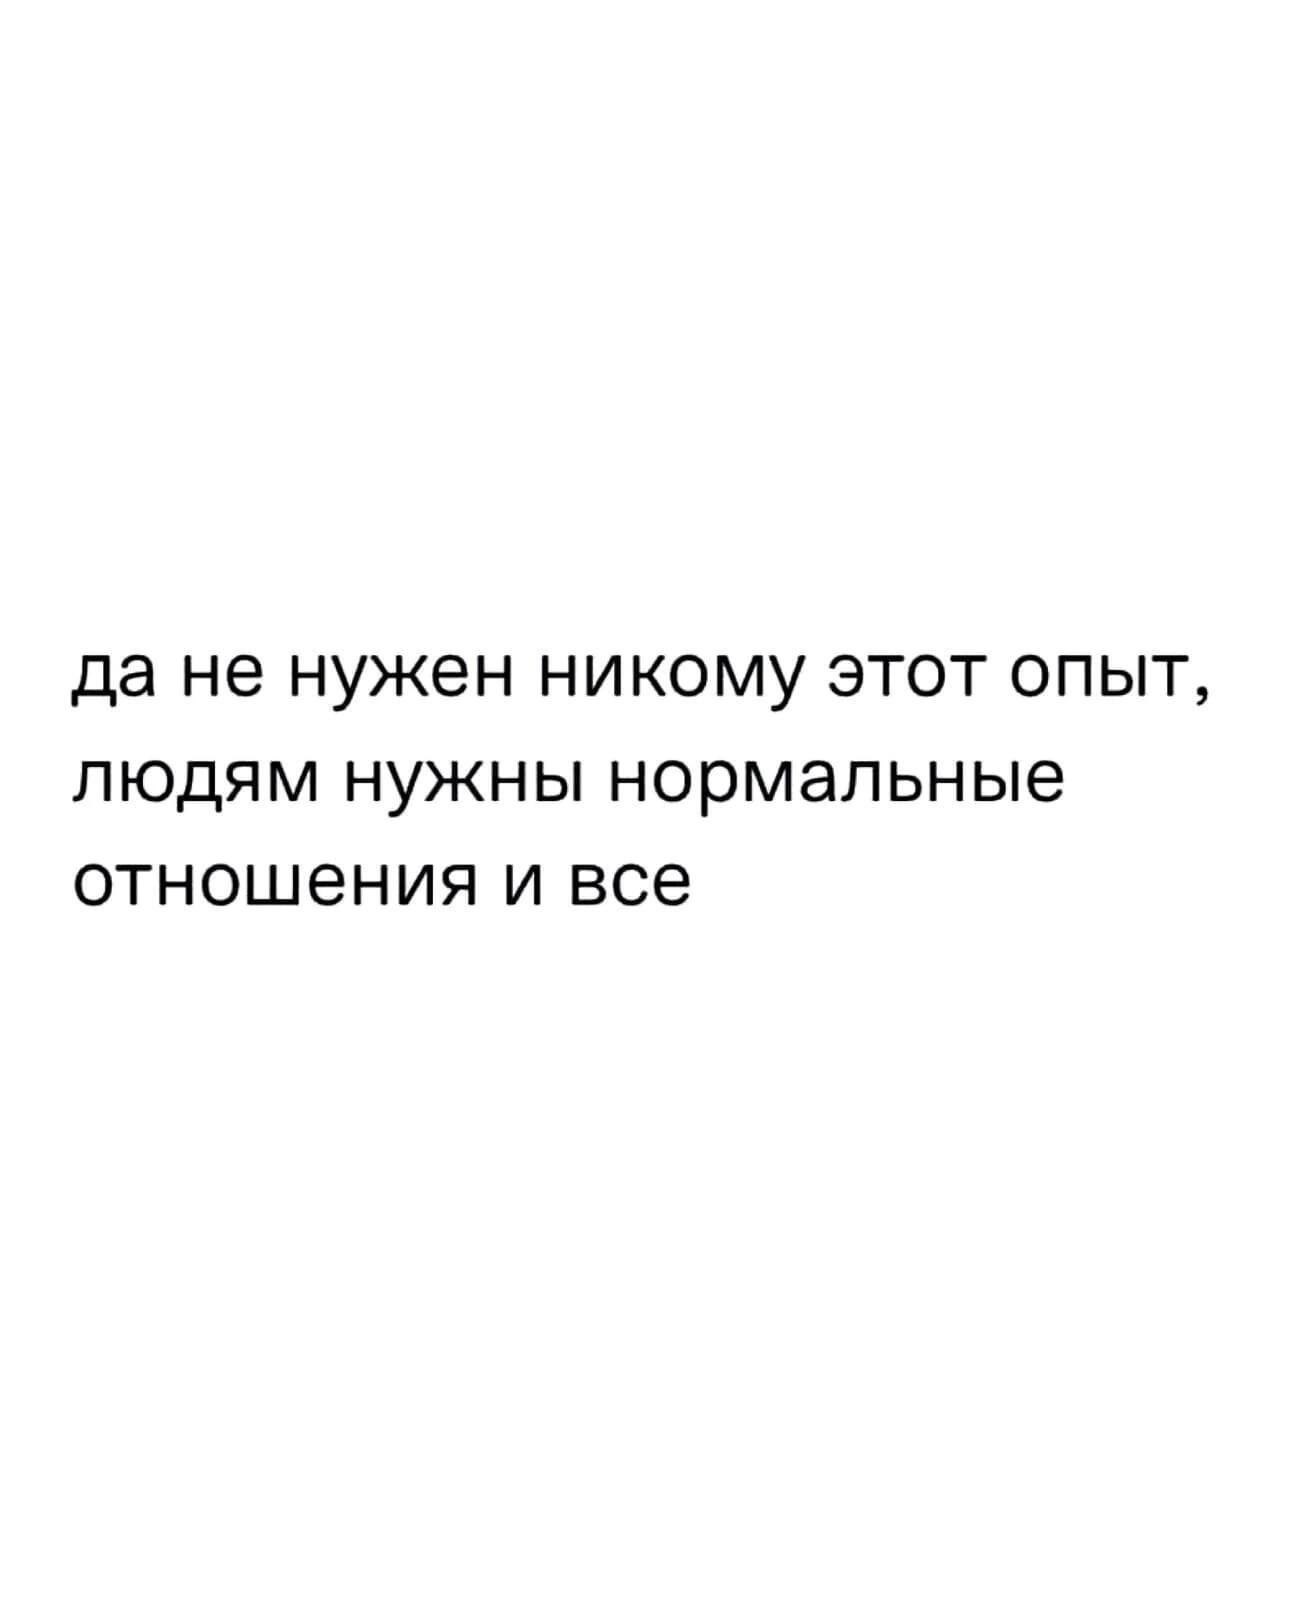 ***Victoria Viktorovna*** - 7  2023  06:13